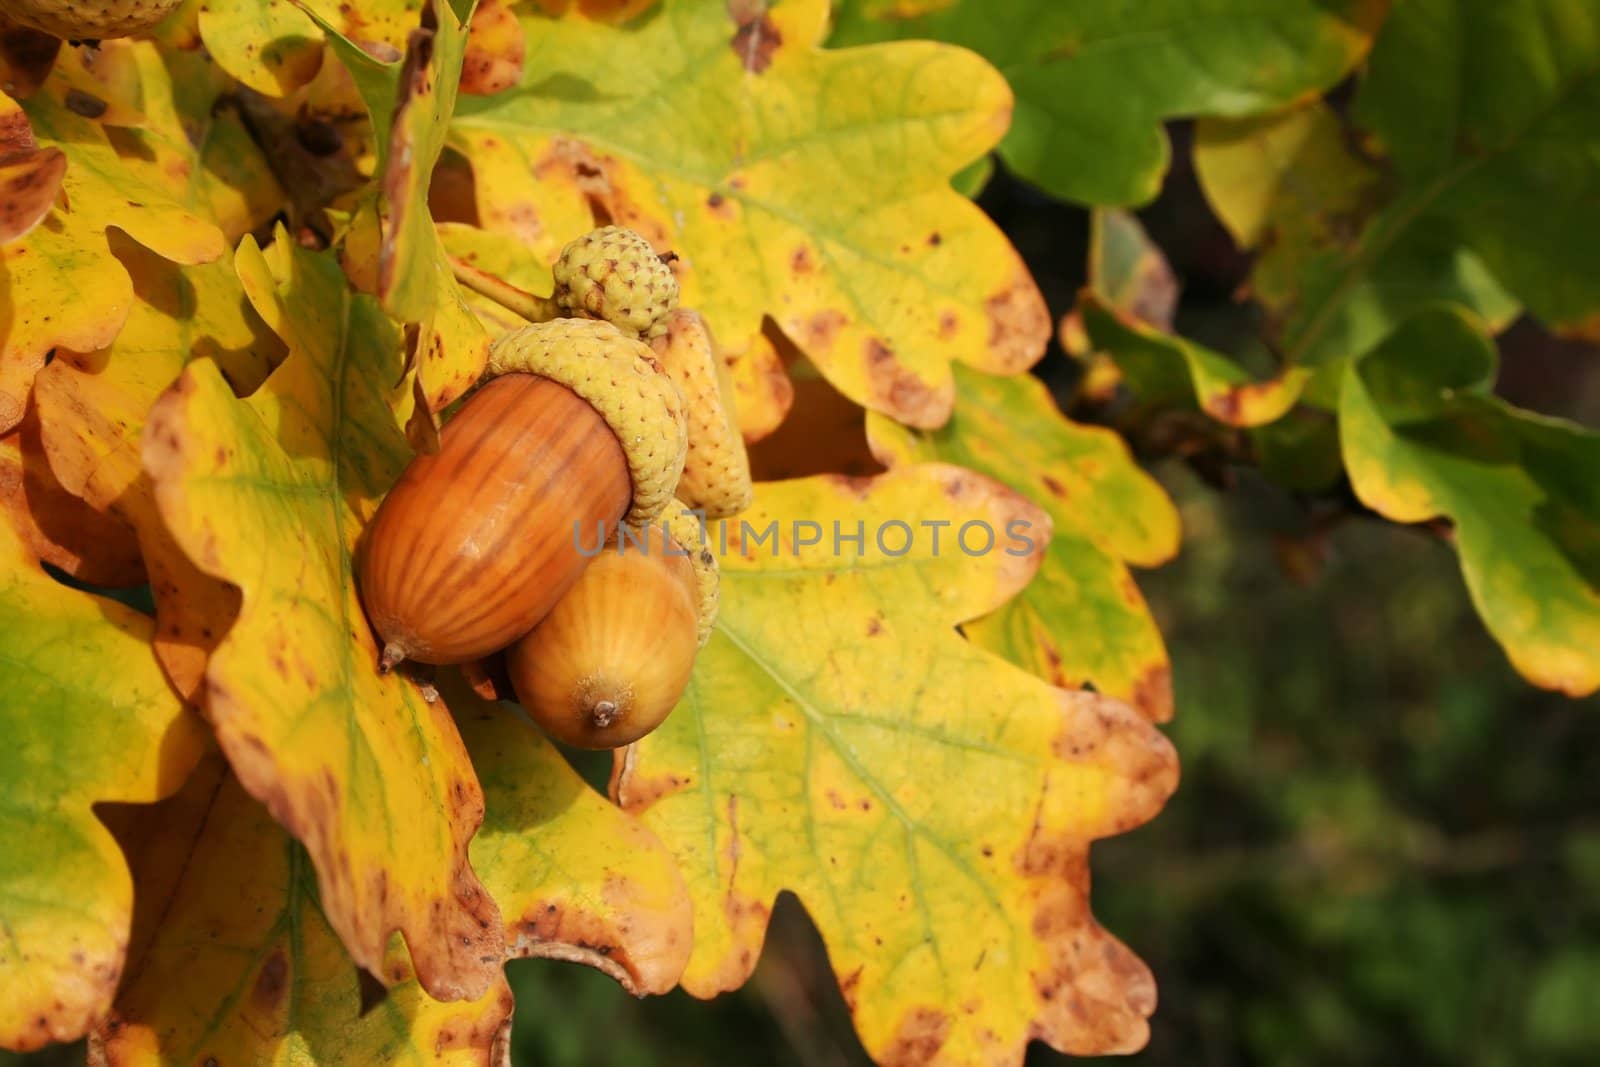 Autumn acorns - nice autumn colors